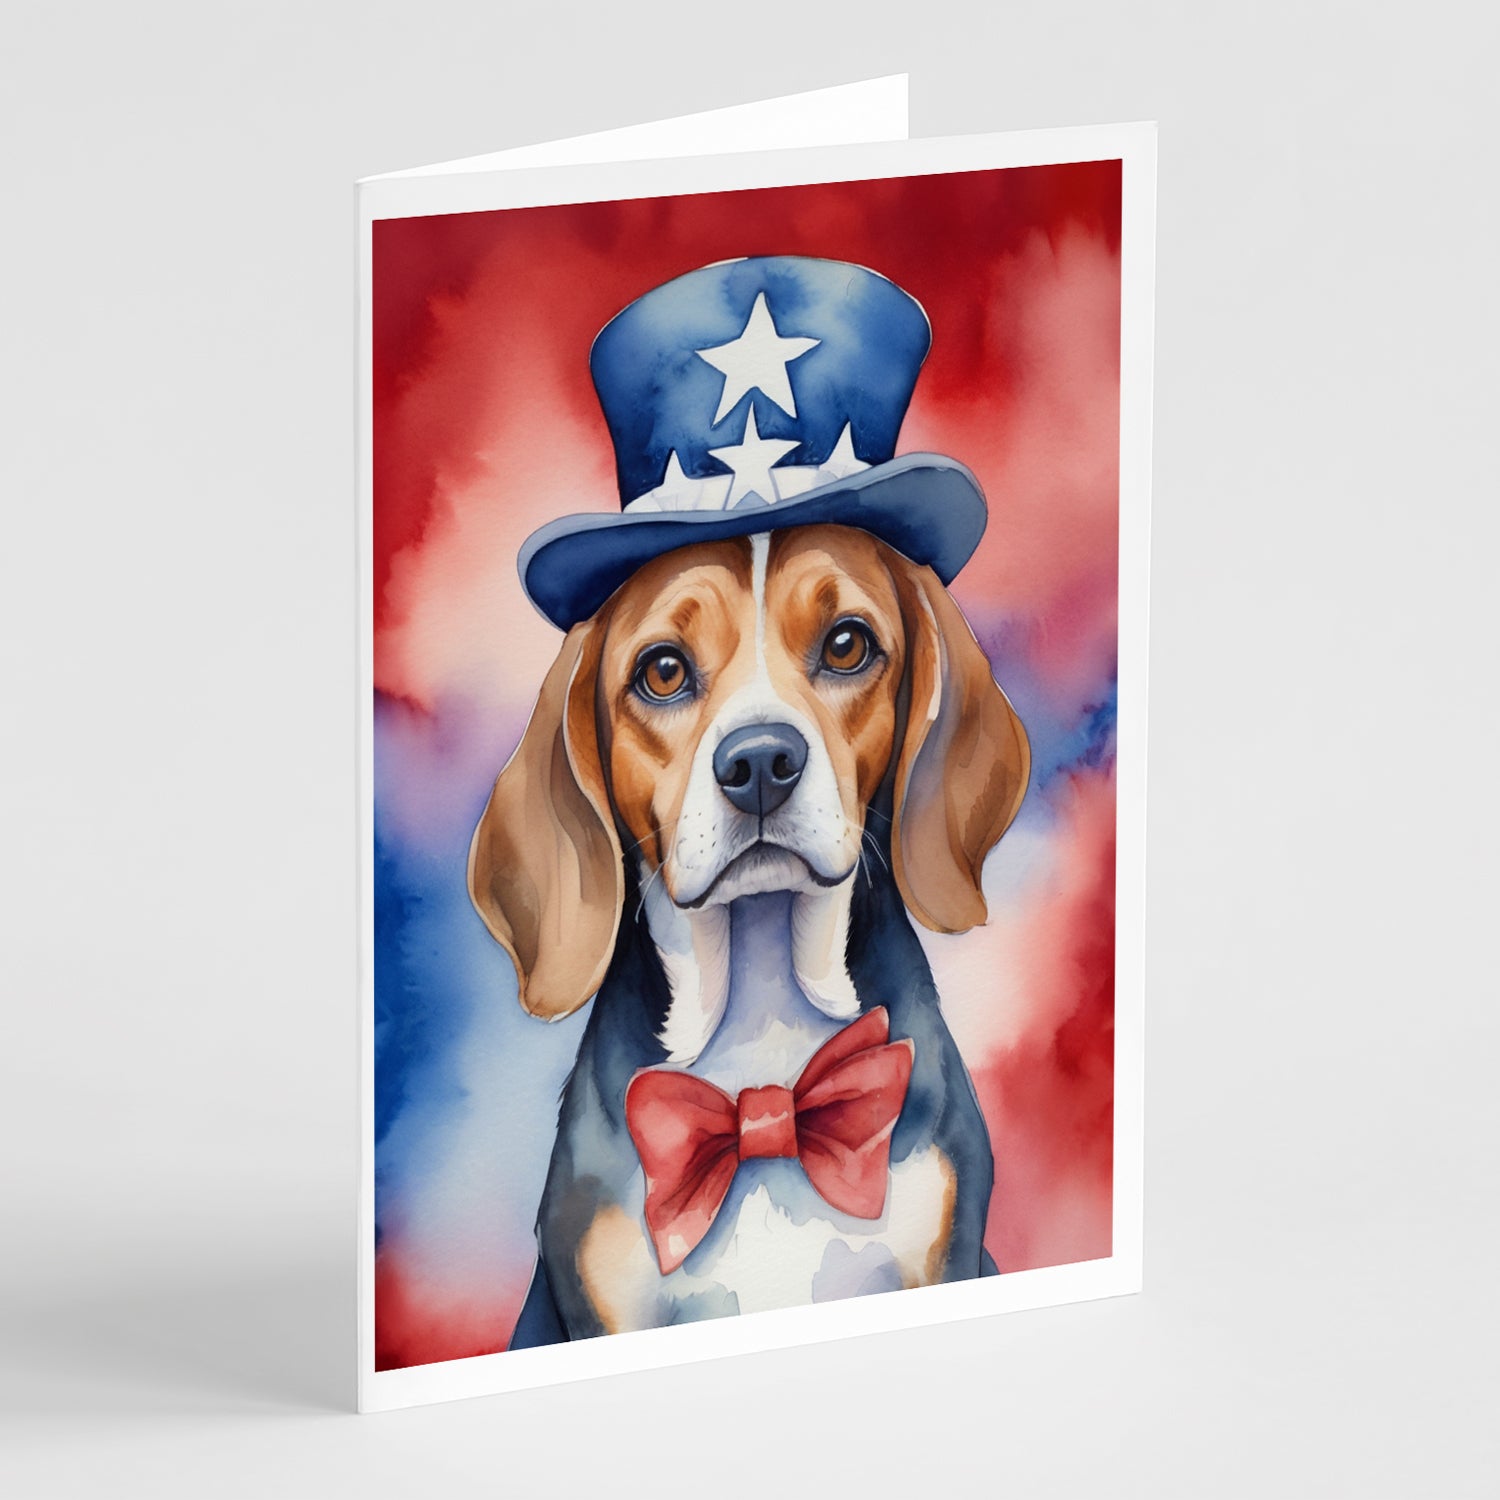 Buy this Beagle Patriotic American Greeting Cards Pack of 8